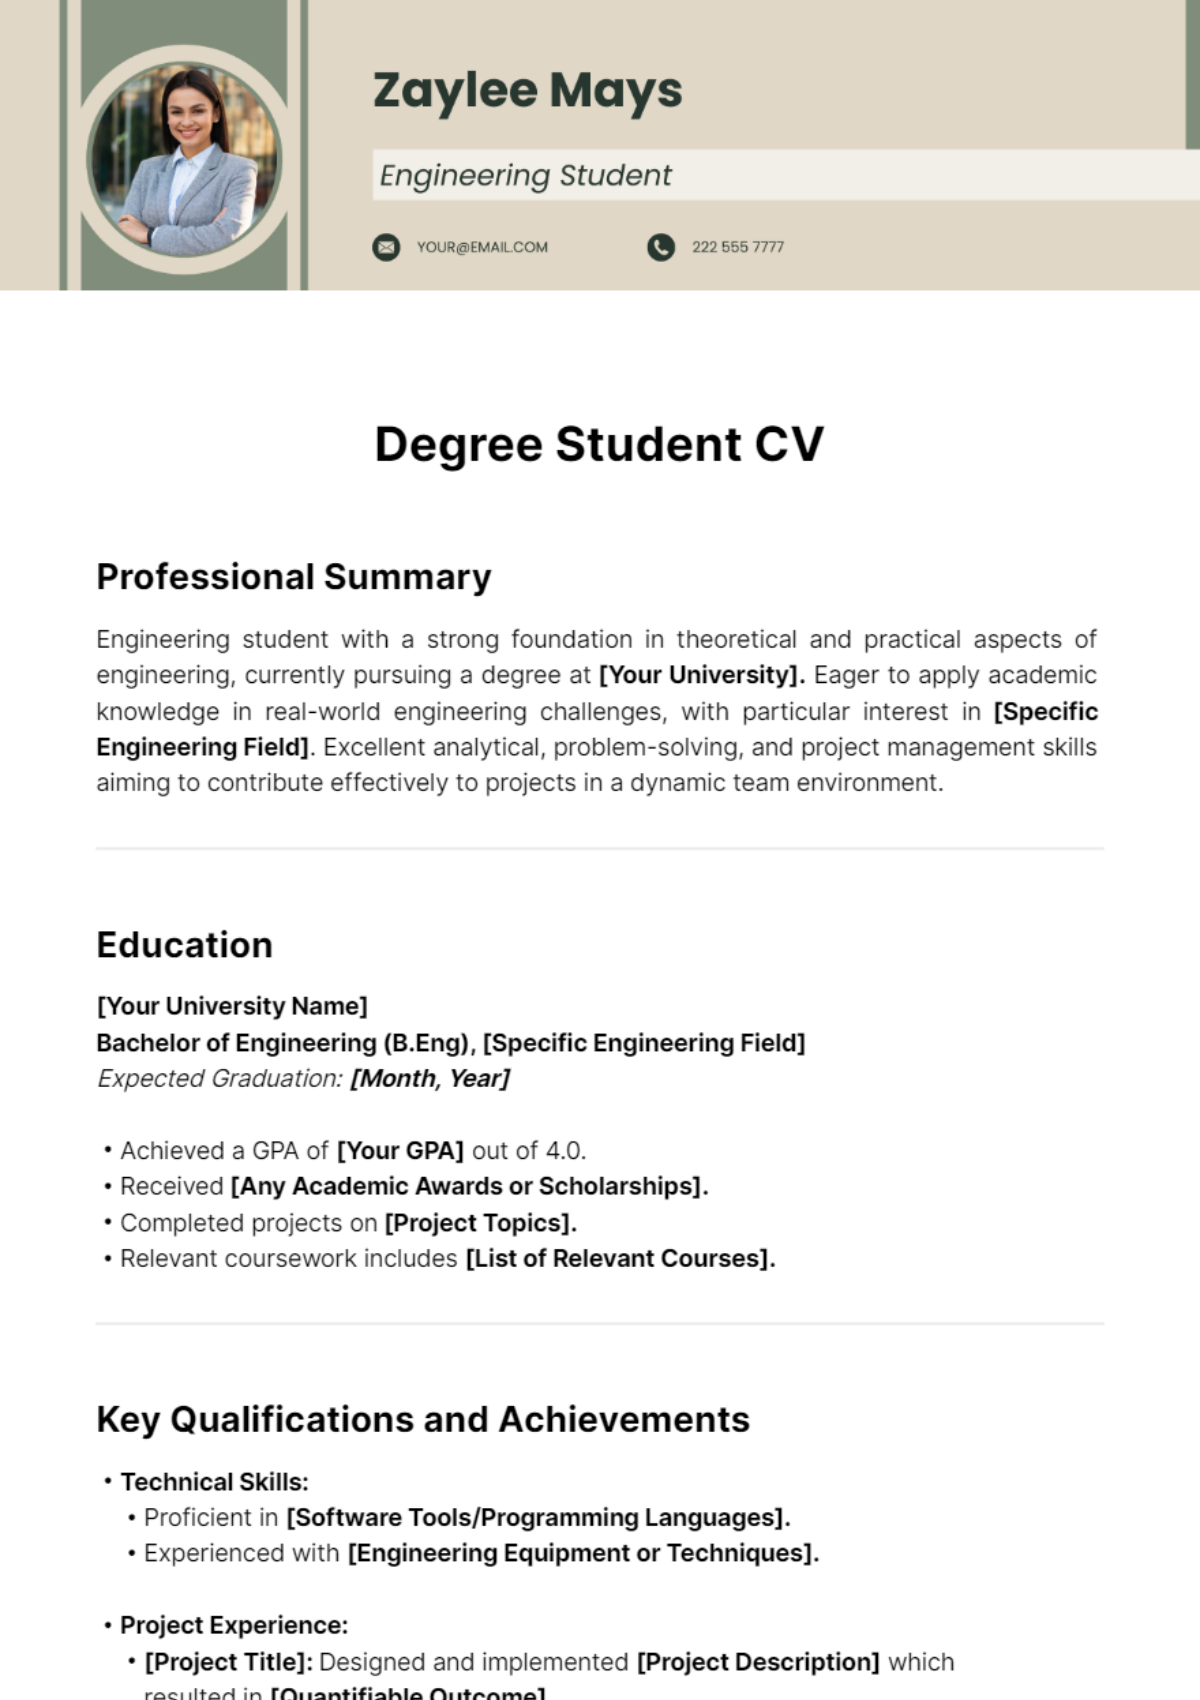 Degree Student CV Template